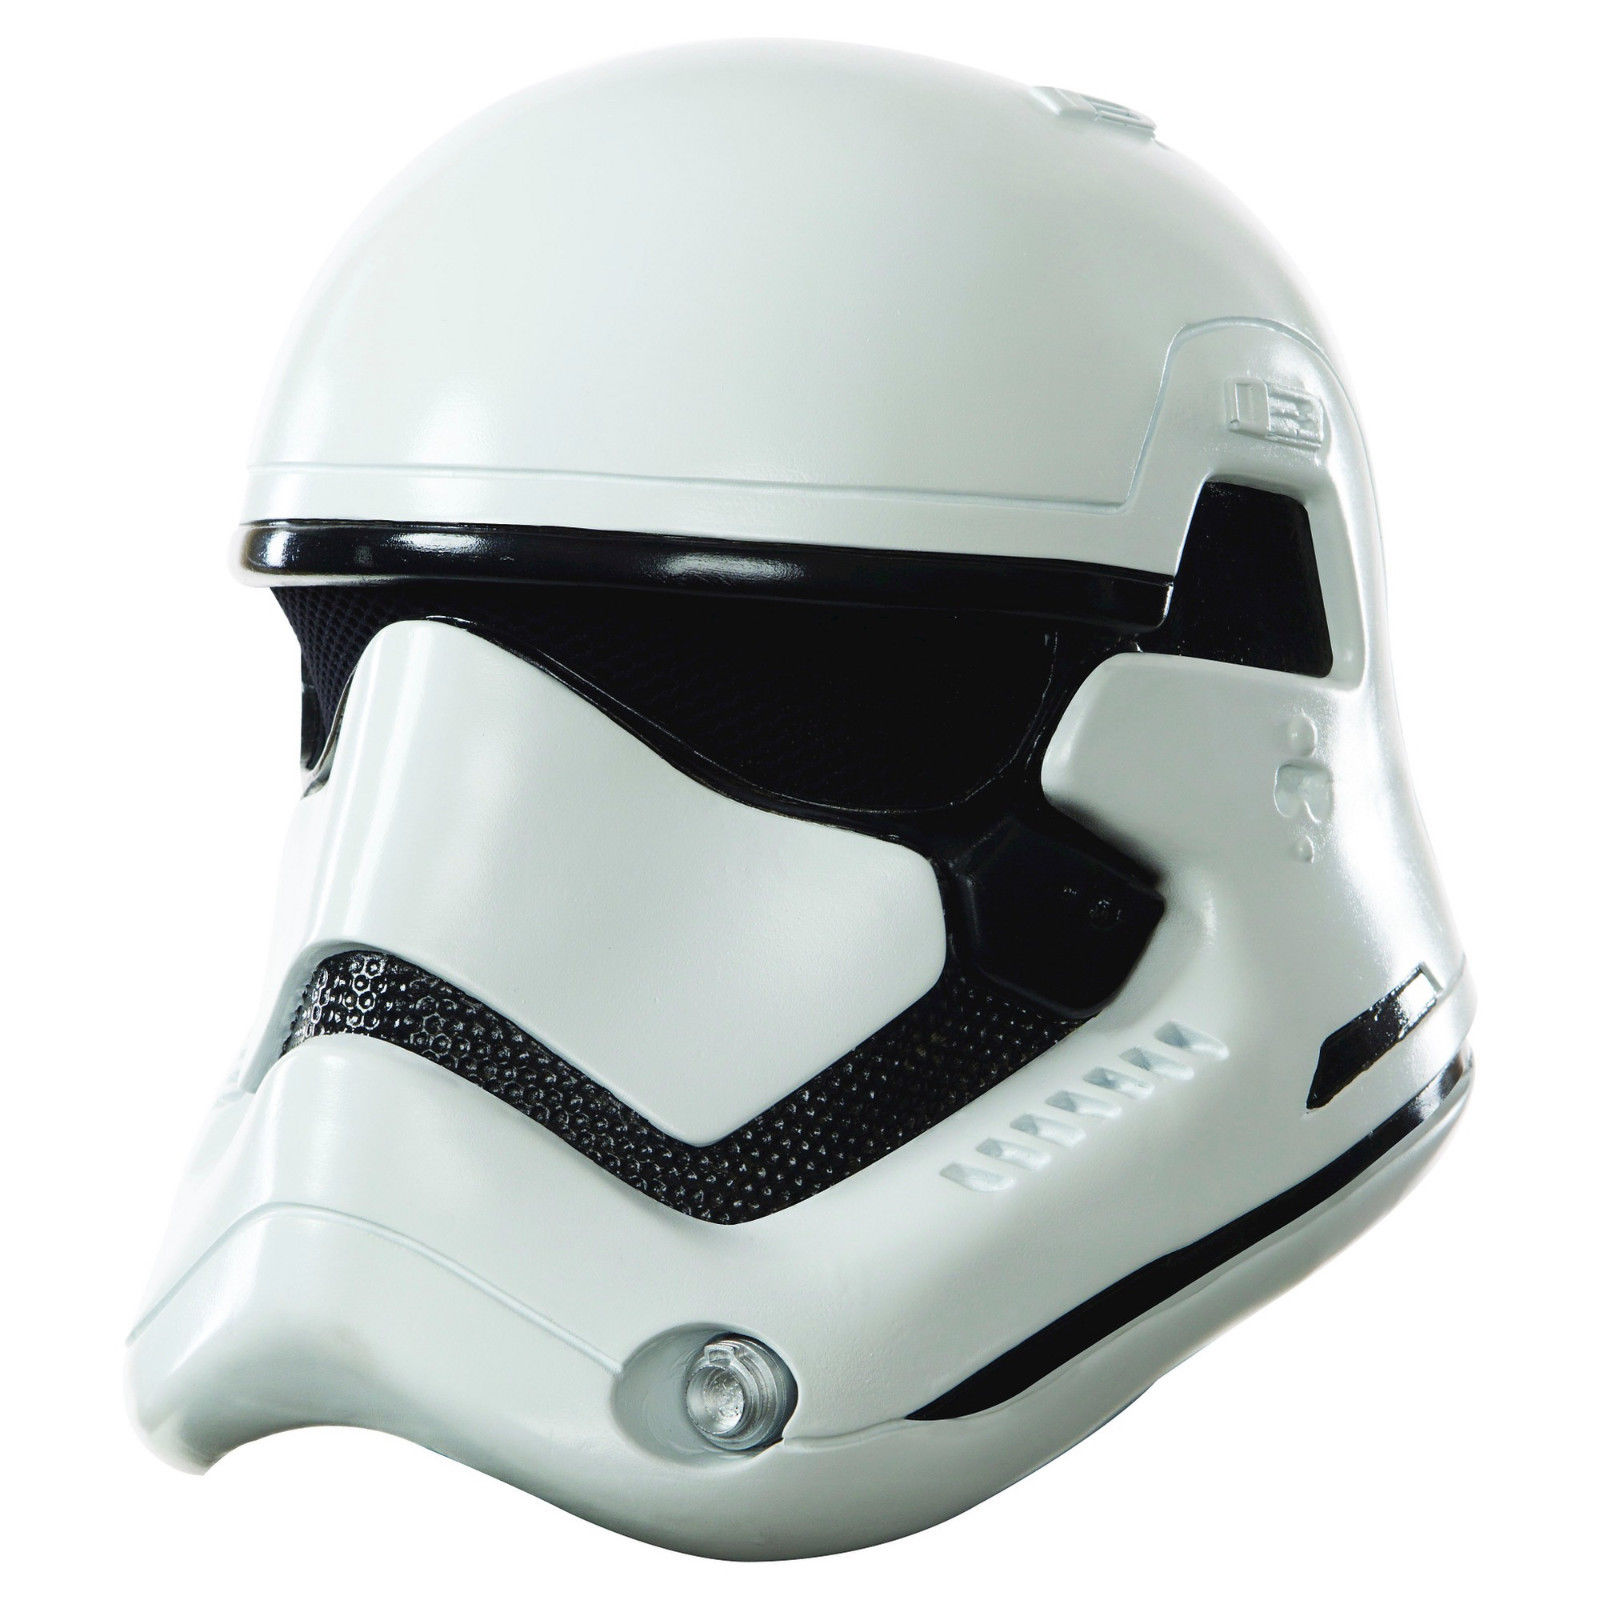 Fotos 360 del casco First Order Stormtrooper (II) #VidePan #FacetheForce #StarWars #Madrid